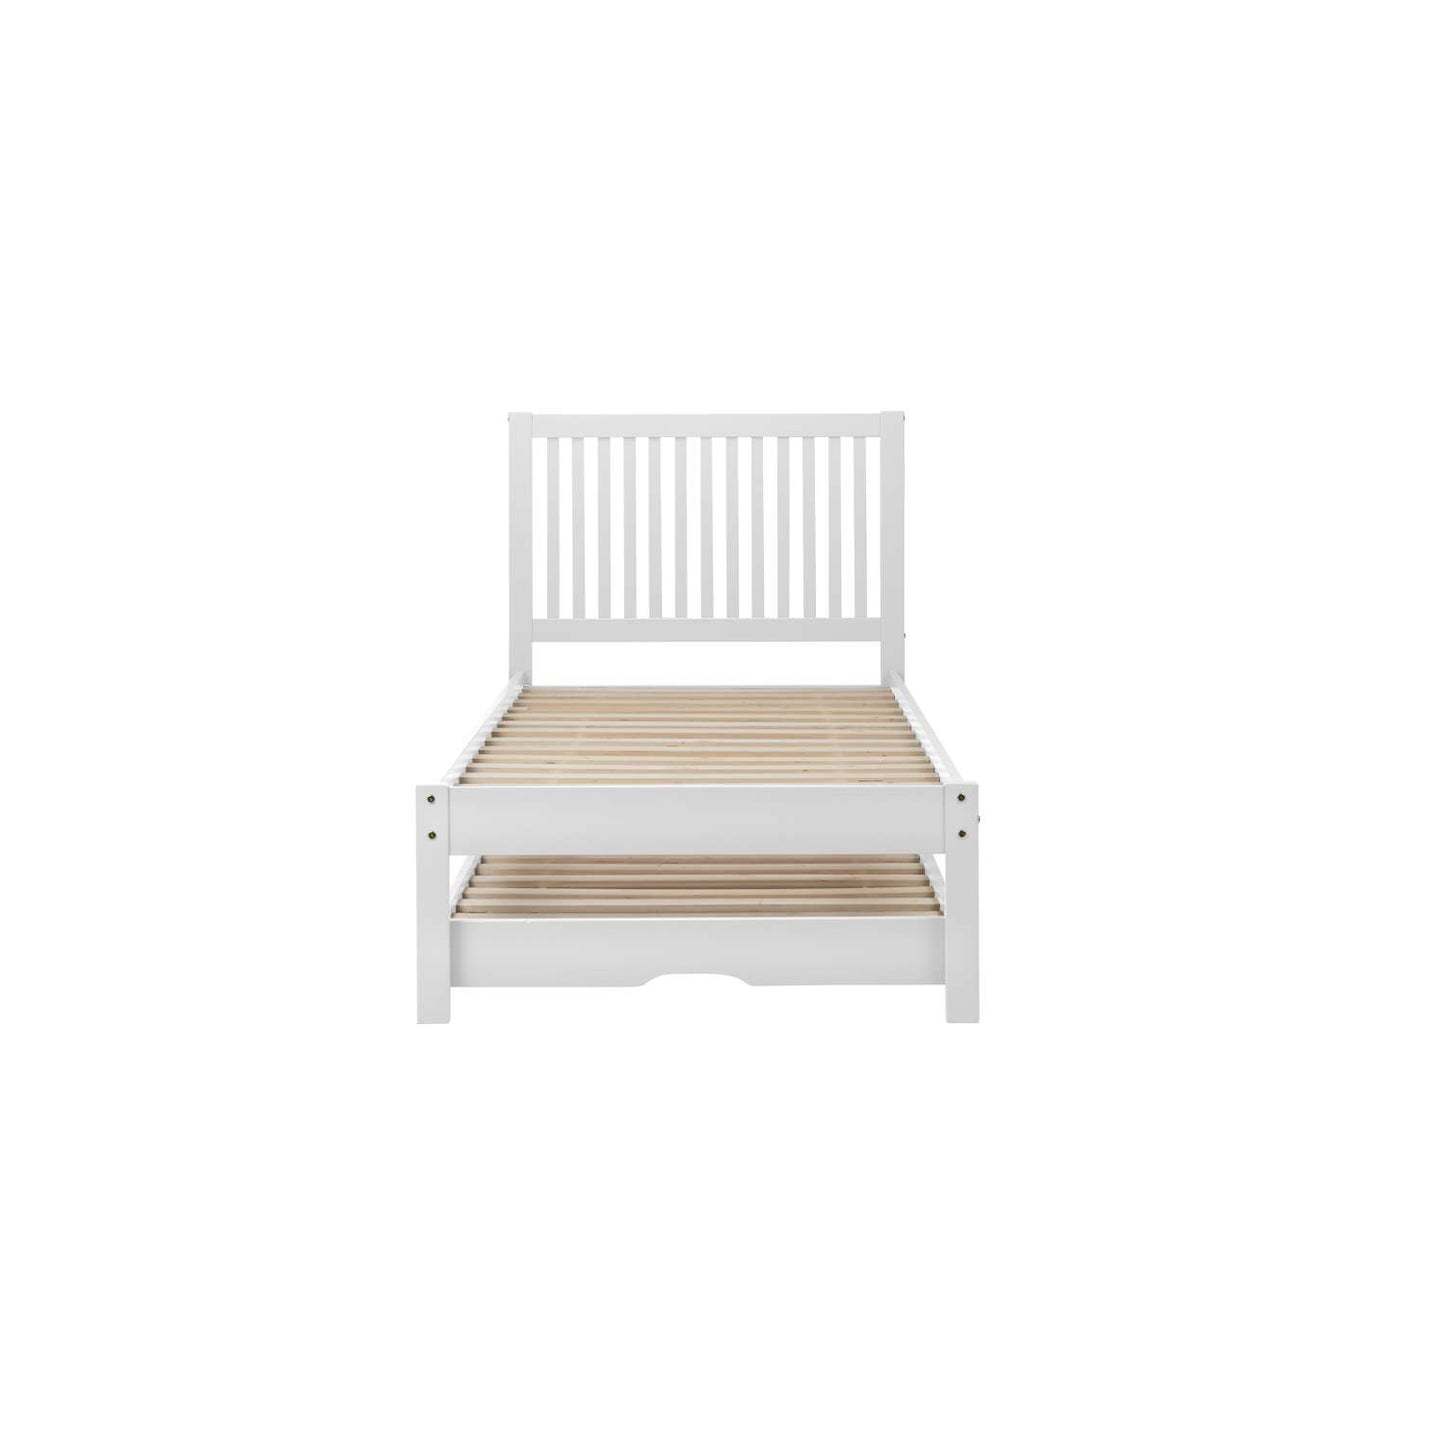 Buxton White Trundle Bed Frame - Single